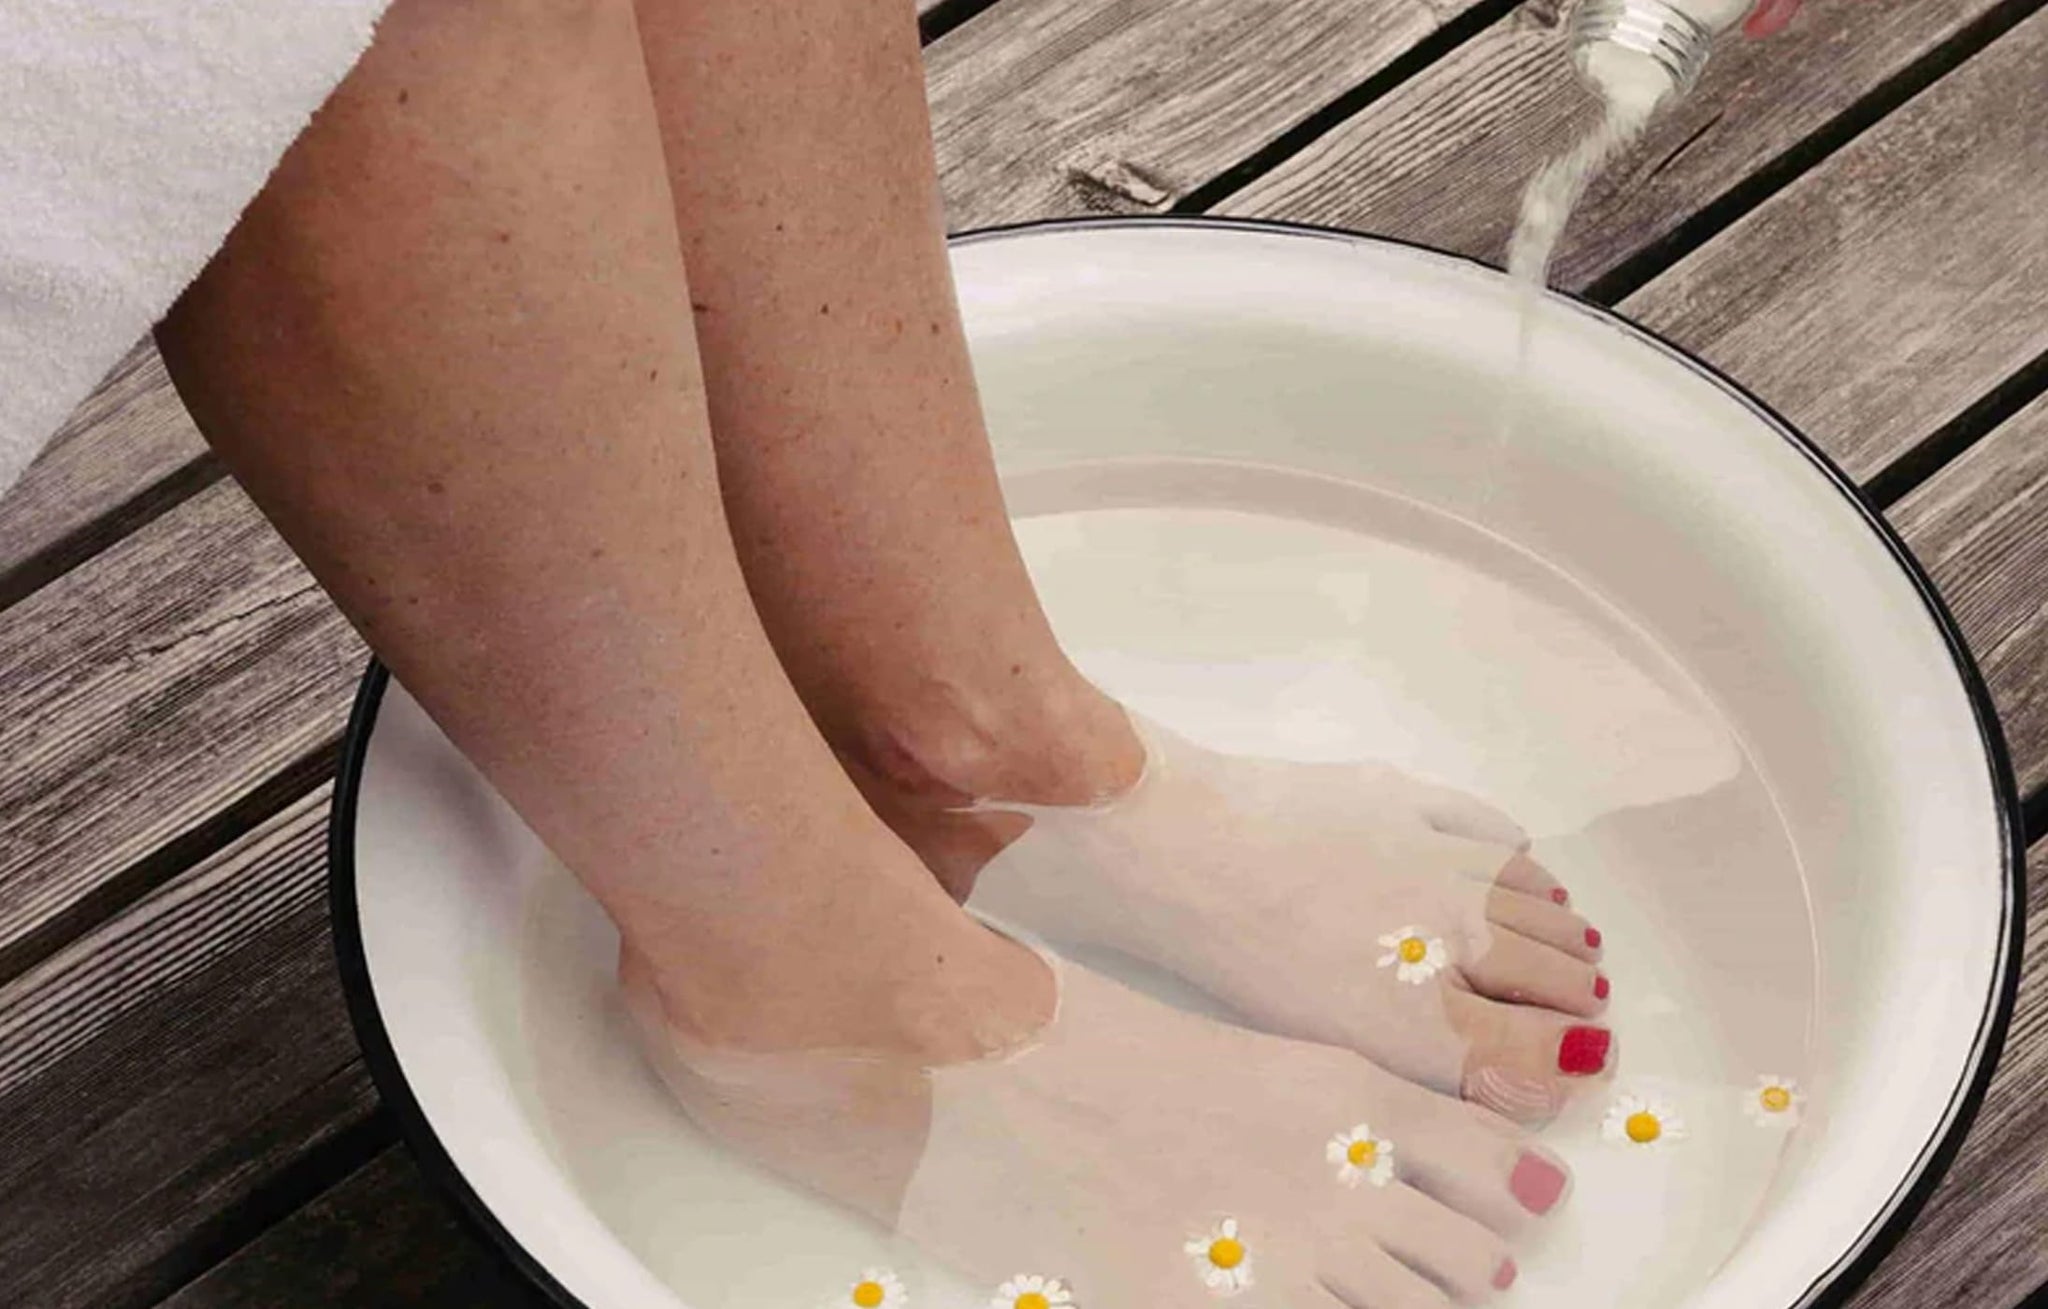 Foot Bath Dying (feet pics) : r/LushCosmetics